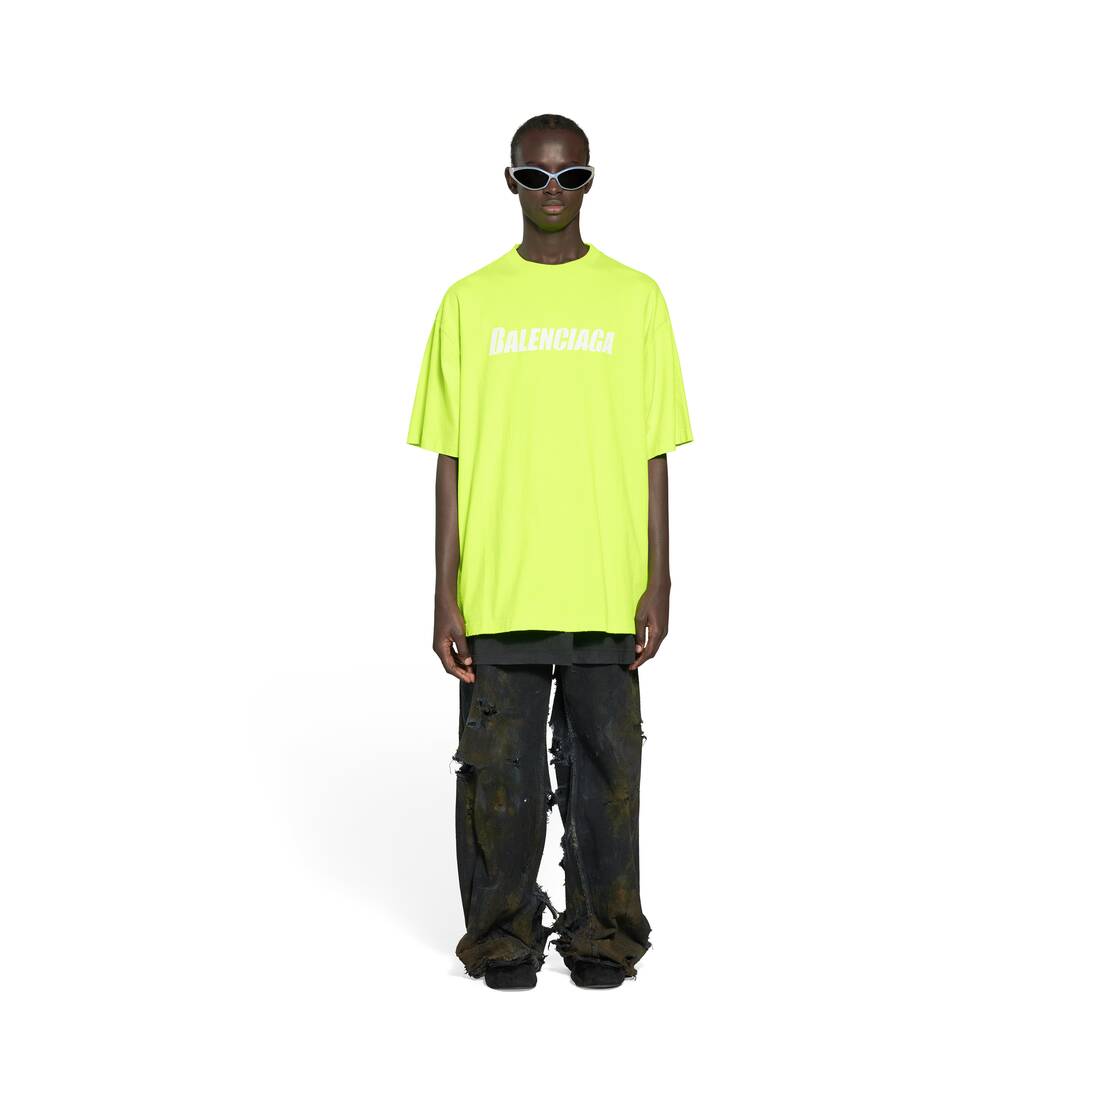 Balenciaga Caps T-Shirt Boxy Fit - Yellow - Unisex - S - Cotton